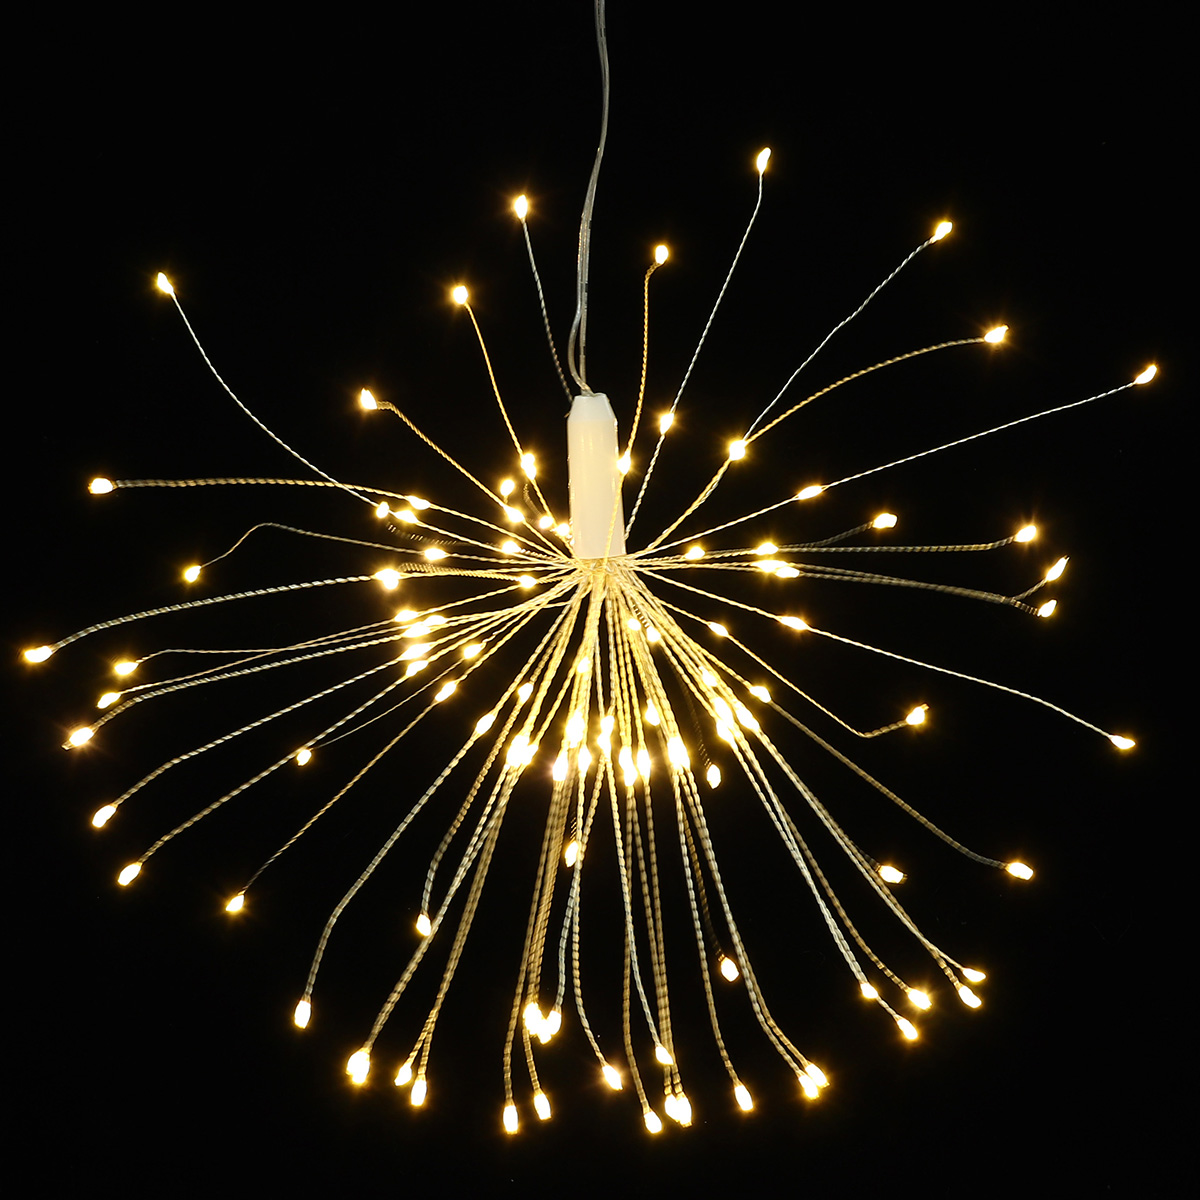 USB-120150180-LED-Hanging-Firework-Fairy-String-Light-Party-Home-Wedding-Decor-1689452-3